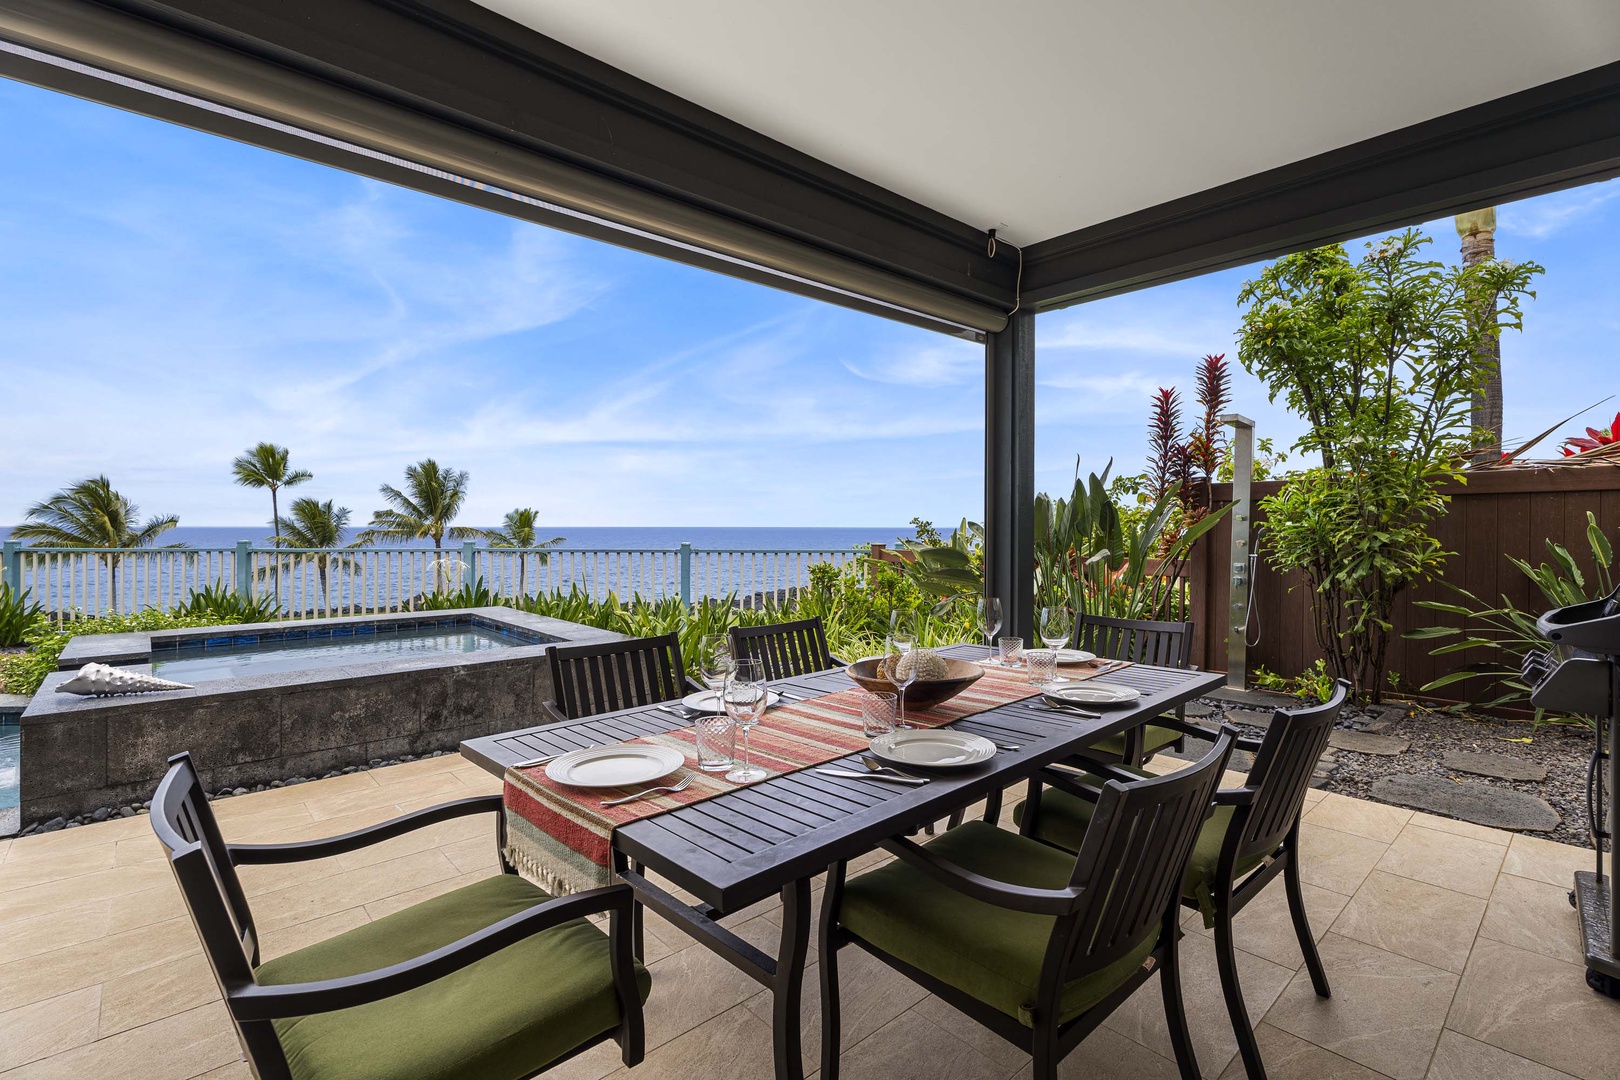 Kailua Kona Vacation Rentals, Holua Kai #20 - Outdoor dining with the ocean on the horizon